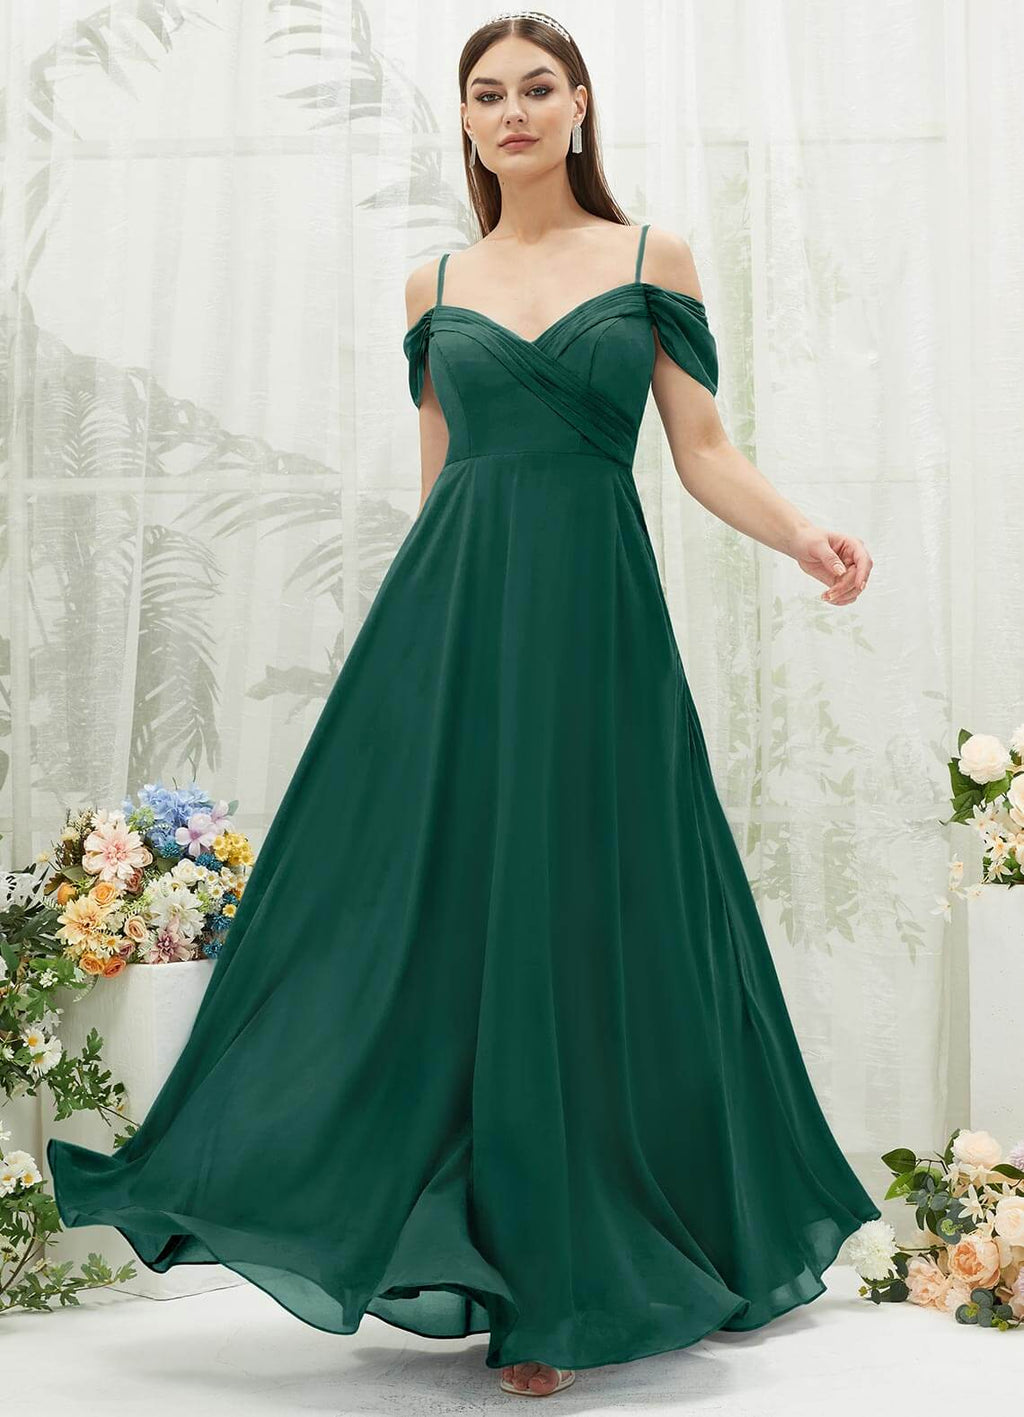 NZ Bridal Emerald Green Cold Shoulder Sweetheart Chiffon Maxi bridesmaid dresses BG30217 Spence a